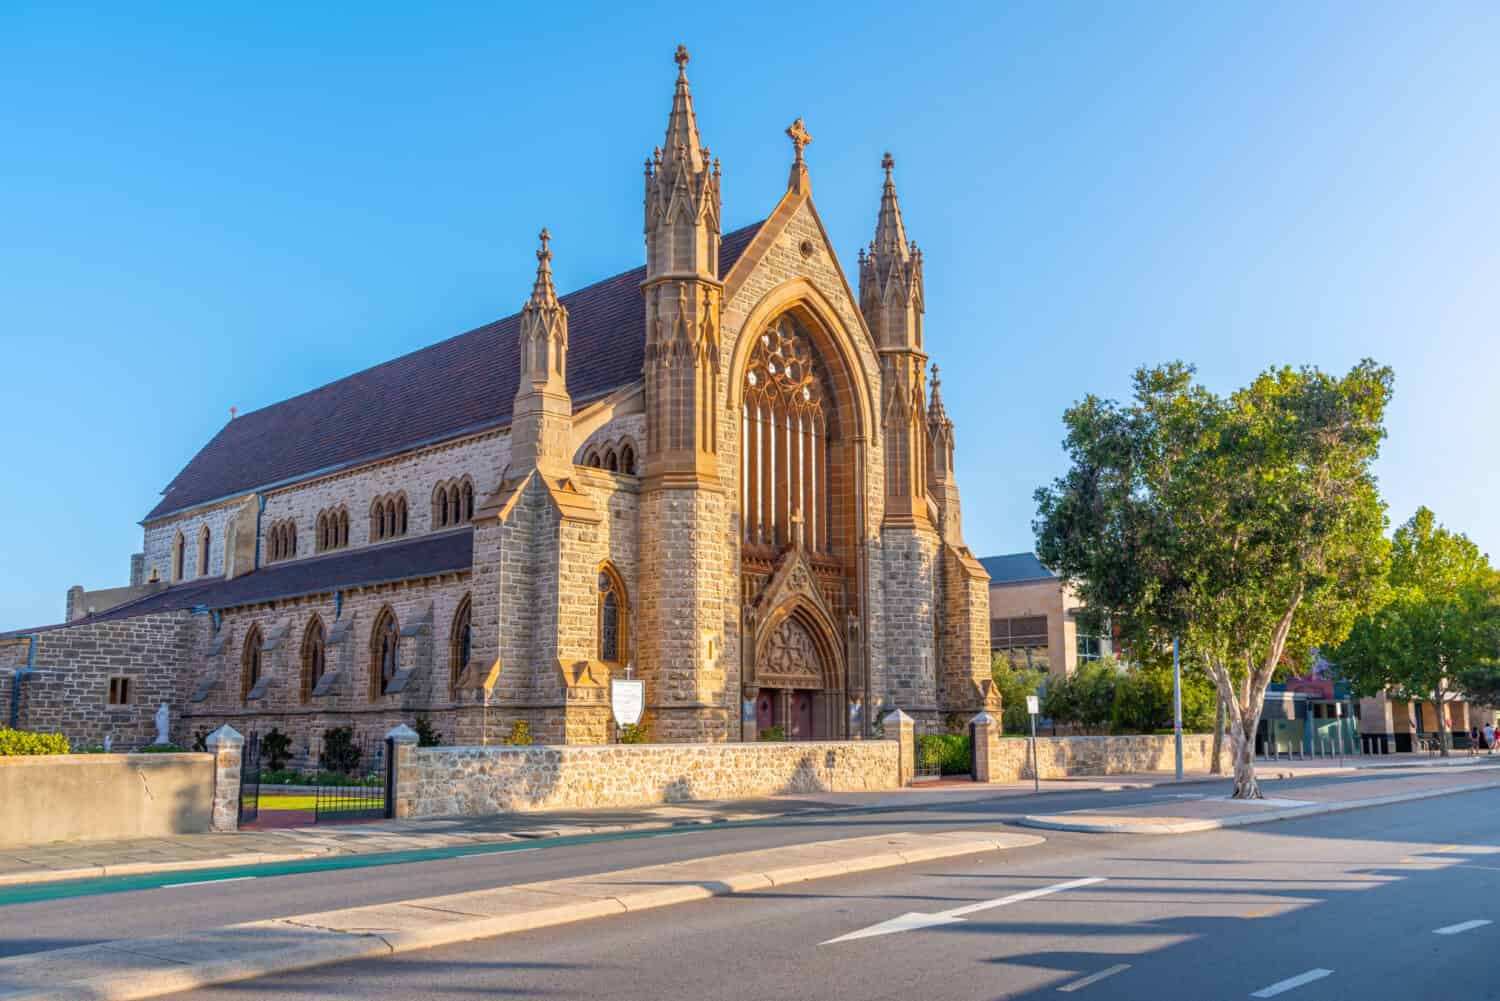 Basilica of Saint Patrick in Fremantle, Australia